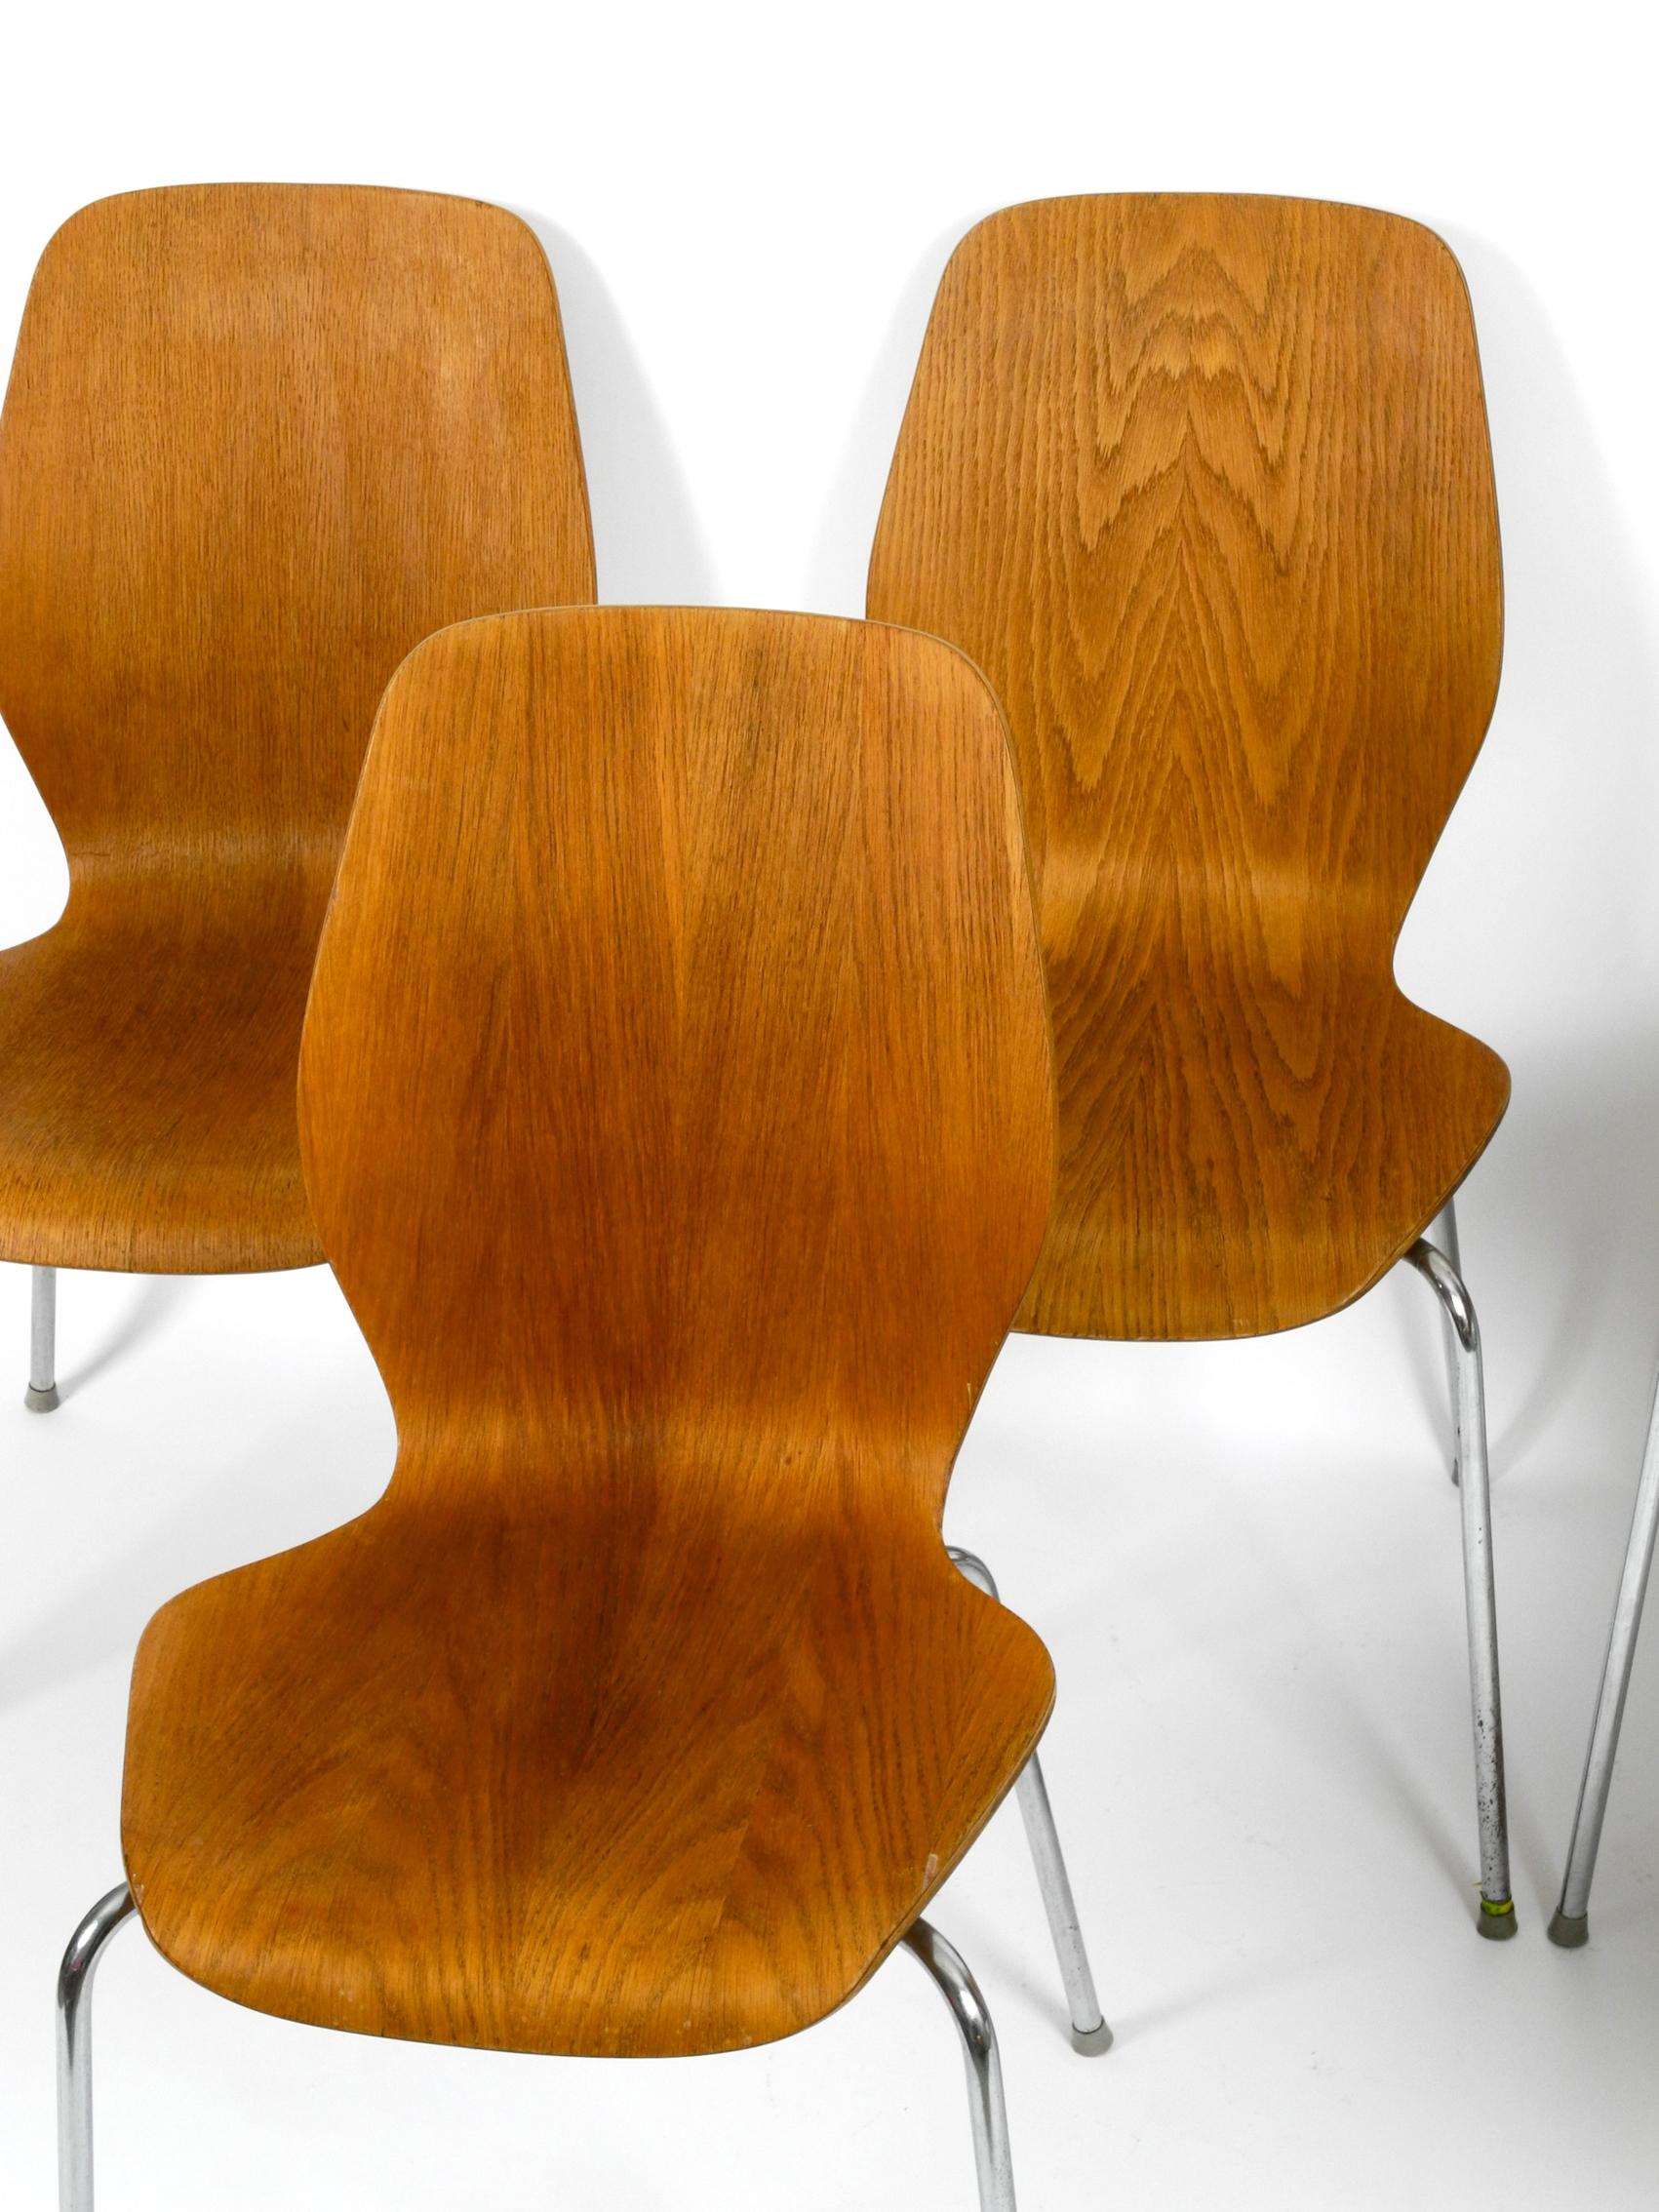 Set of 6 teak plywood chairs by Herbert Hirche for Jofa Stalmobler Denmark 2